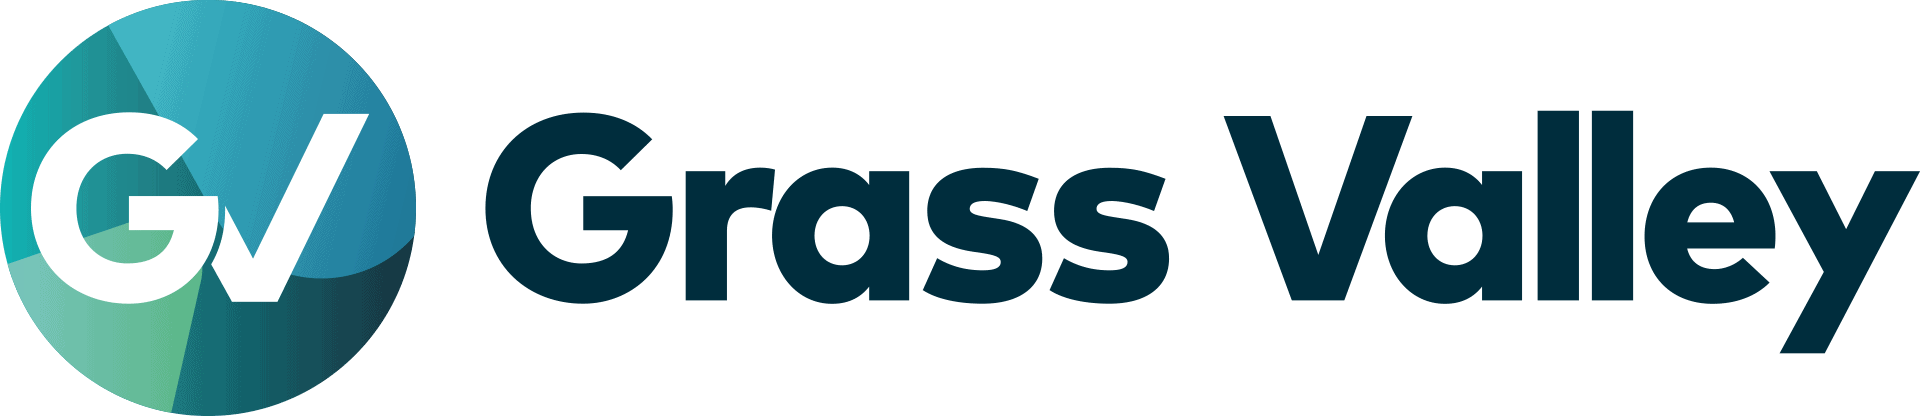 Grass Valley Logo